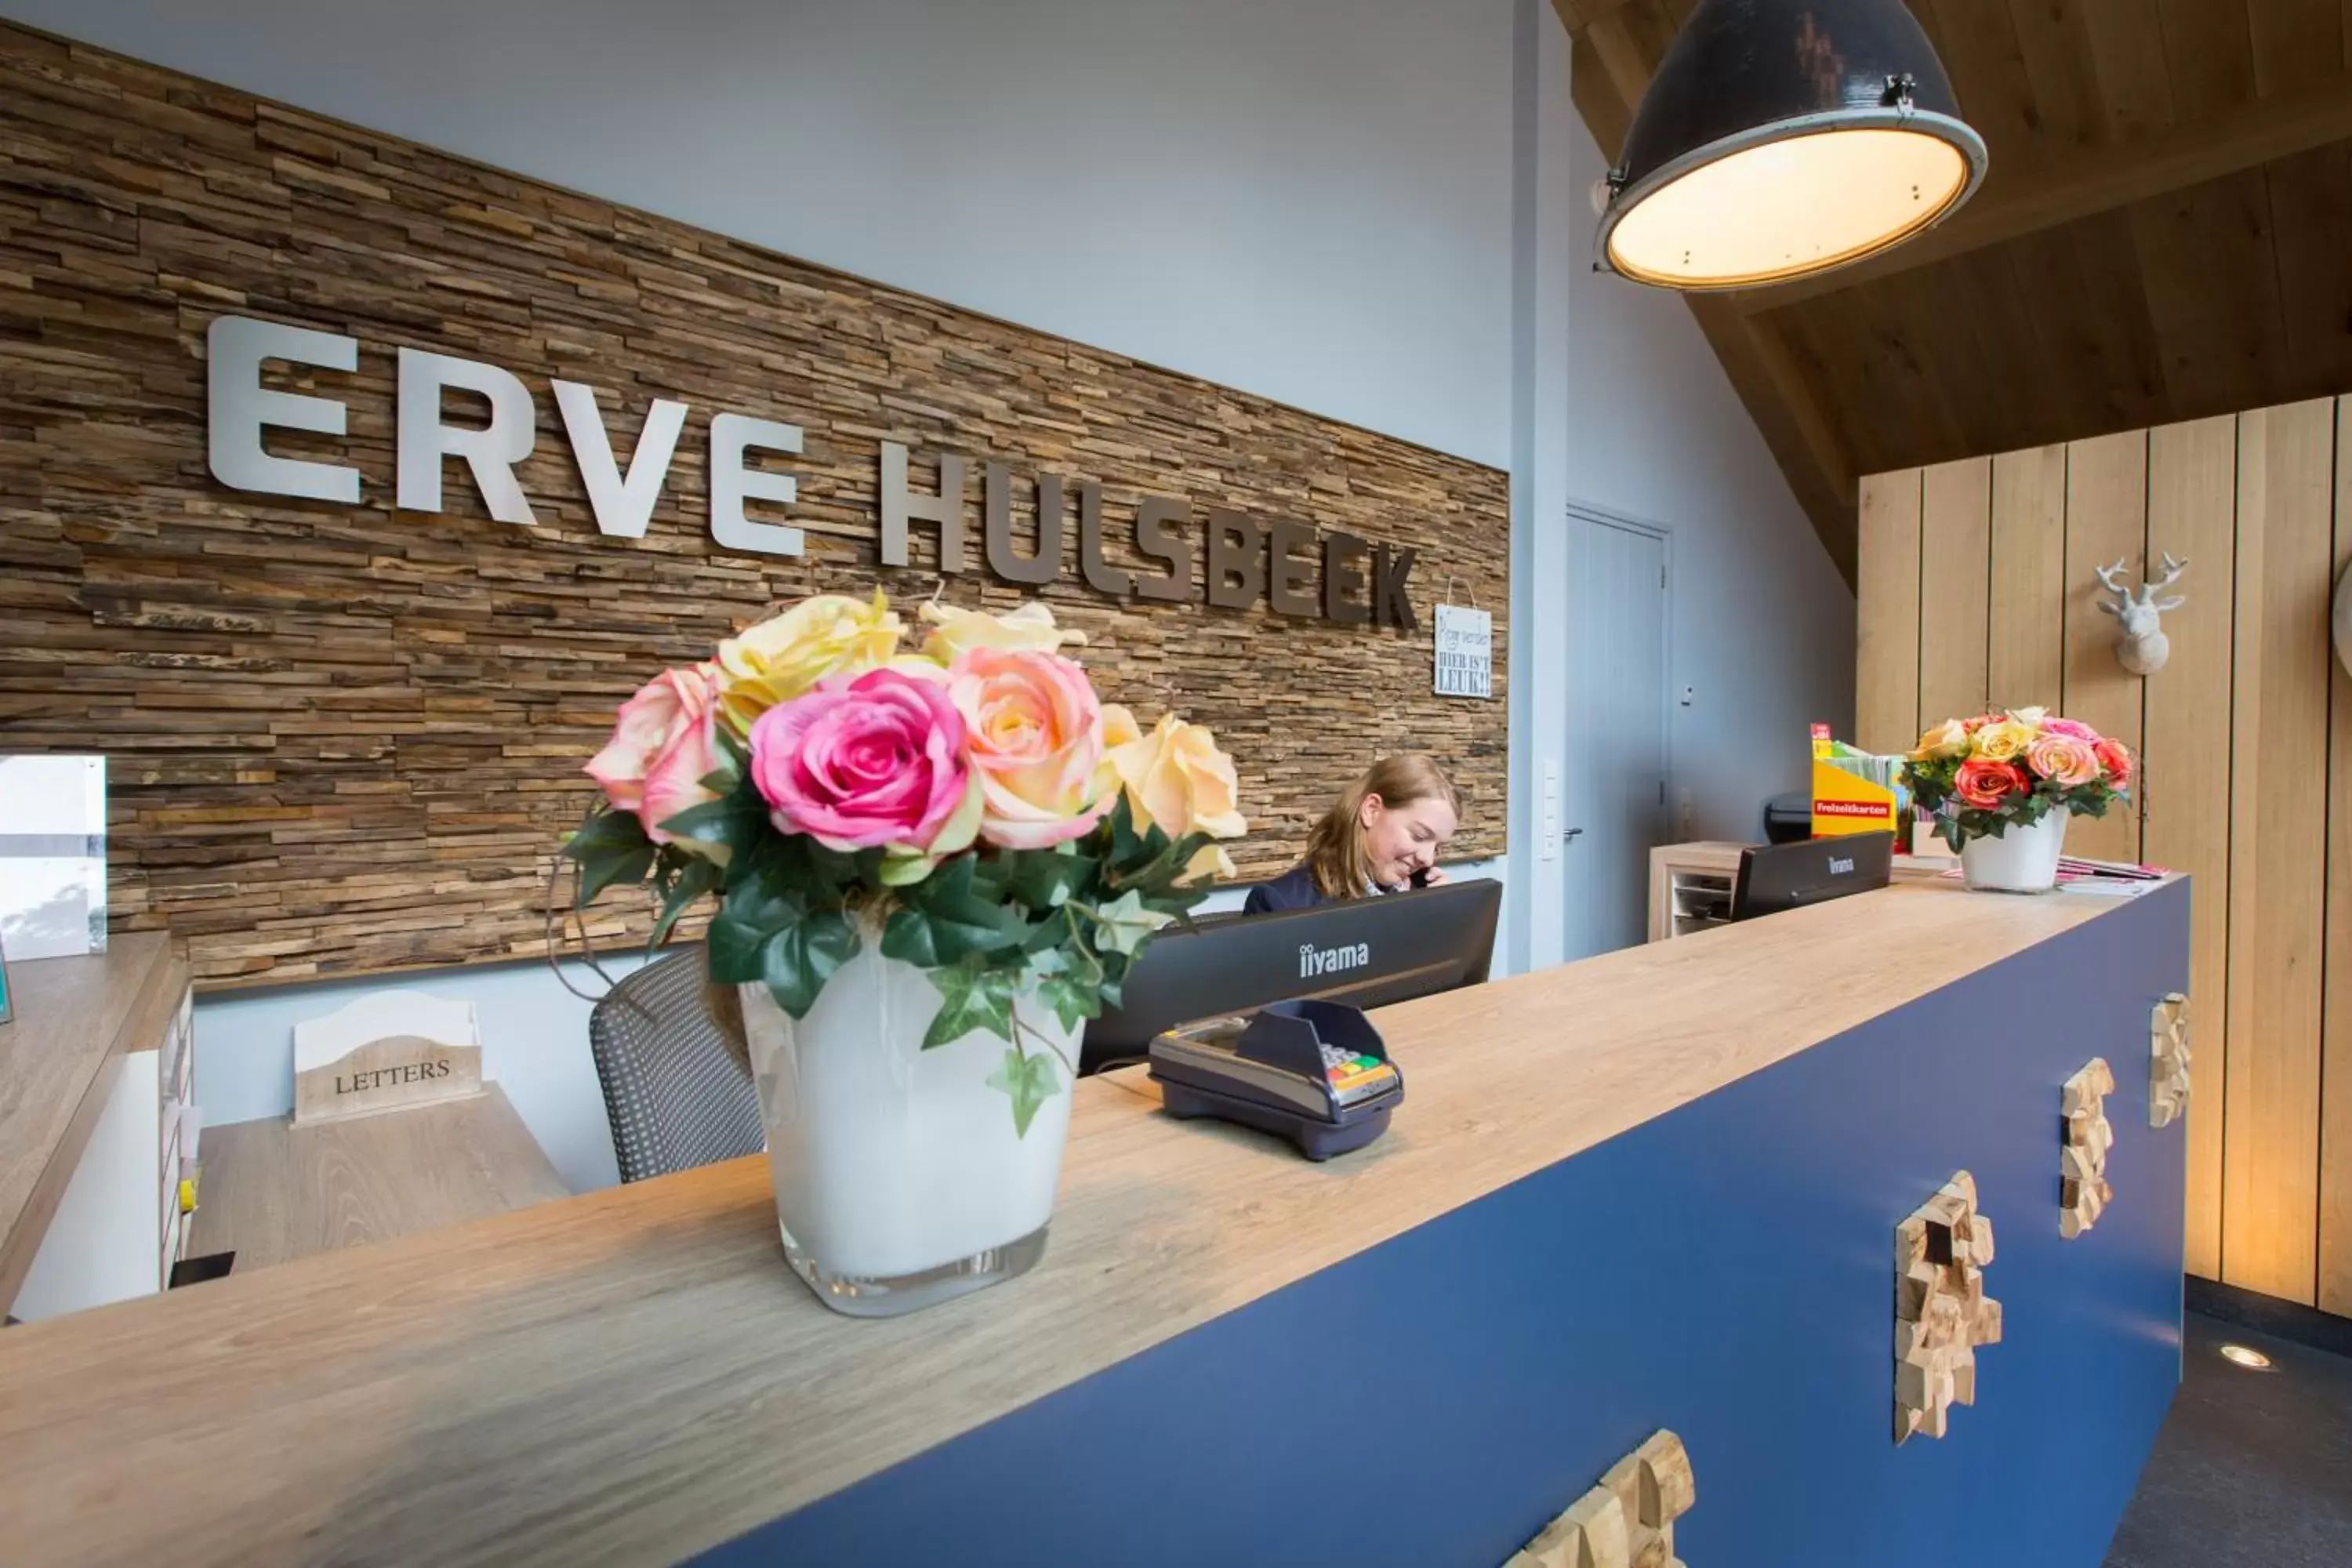 Lobby or reception in Hotel Erve Hulsbeek